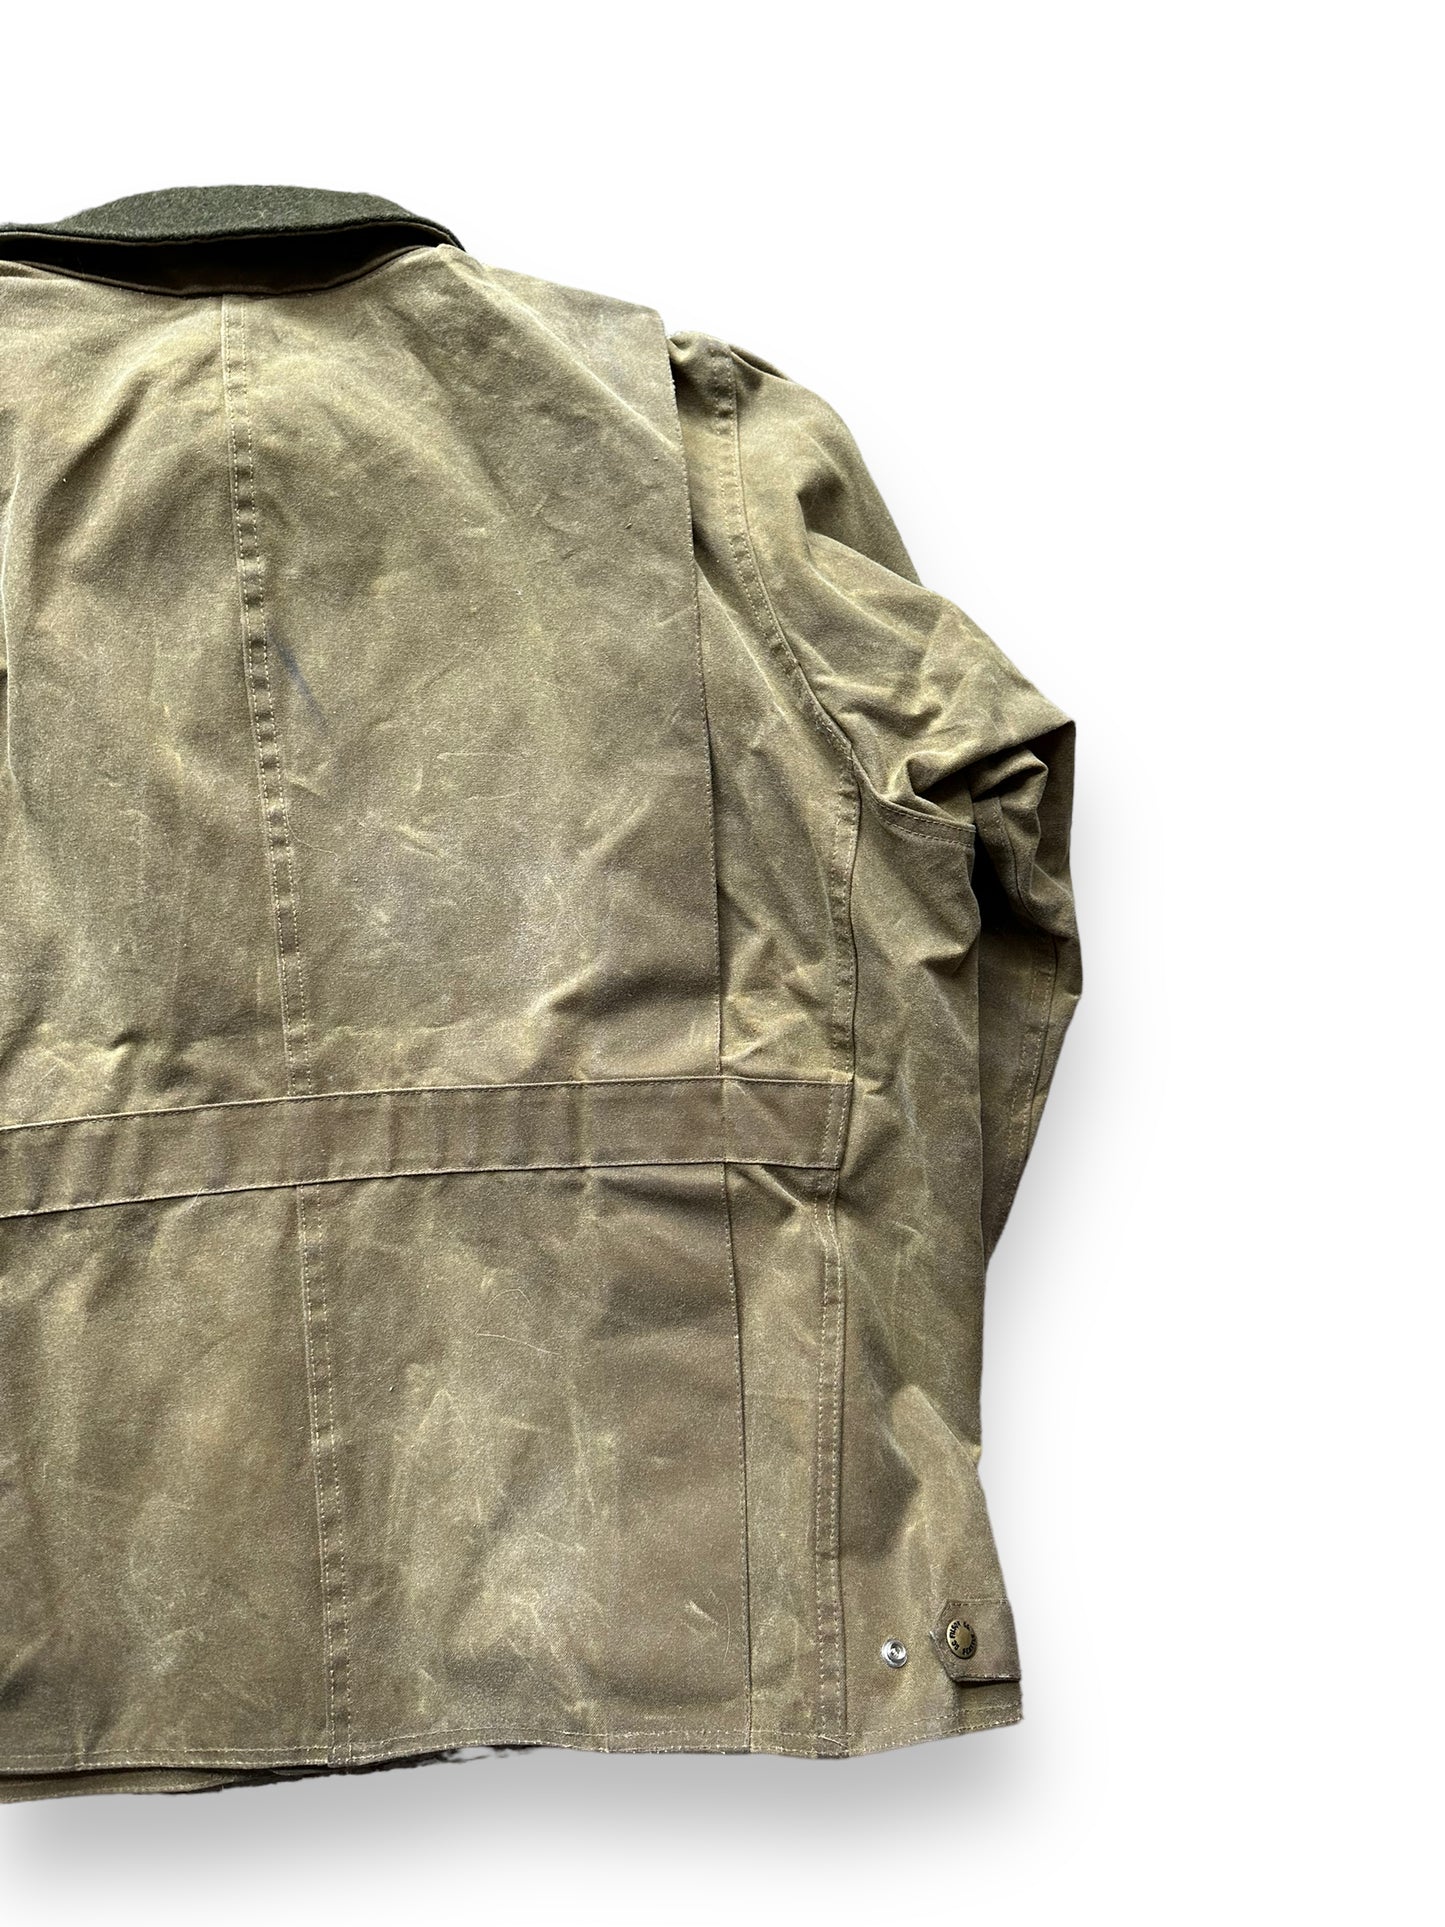 Right Rear View of Filson Tin Cloth Jacket SZ XL |  Barn Owl Vintage Goods | Filson Workwear Seattle